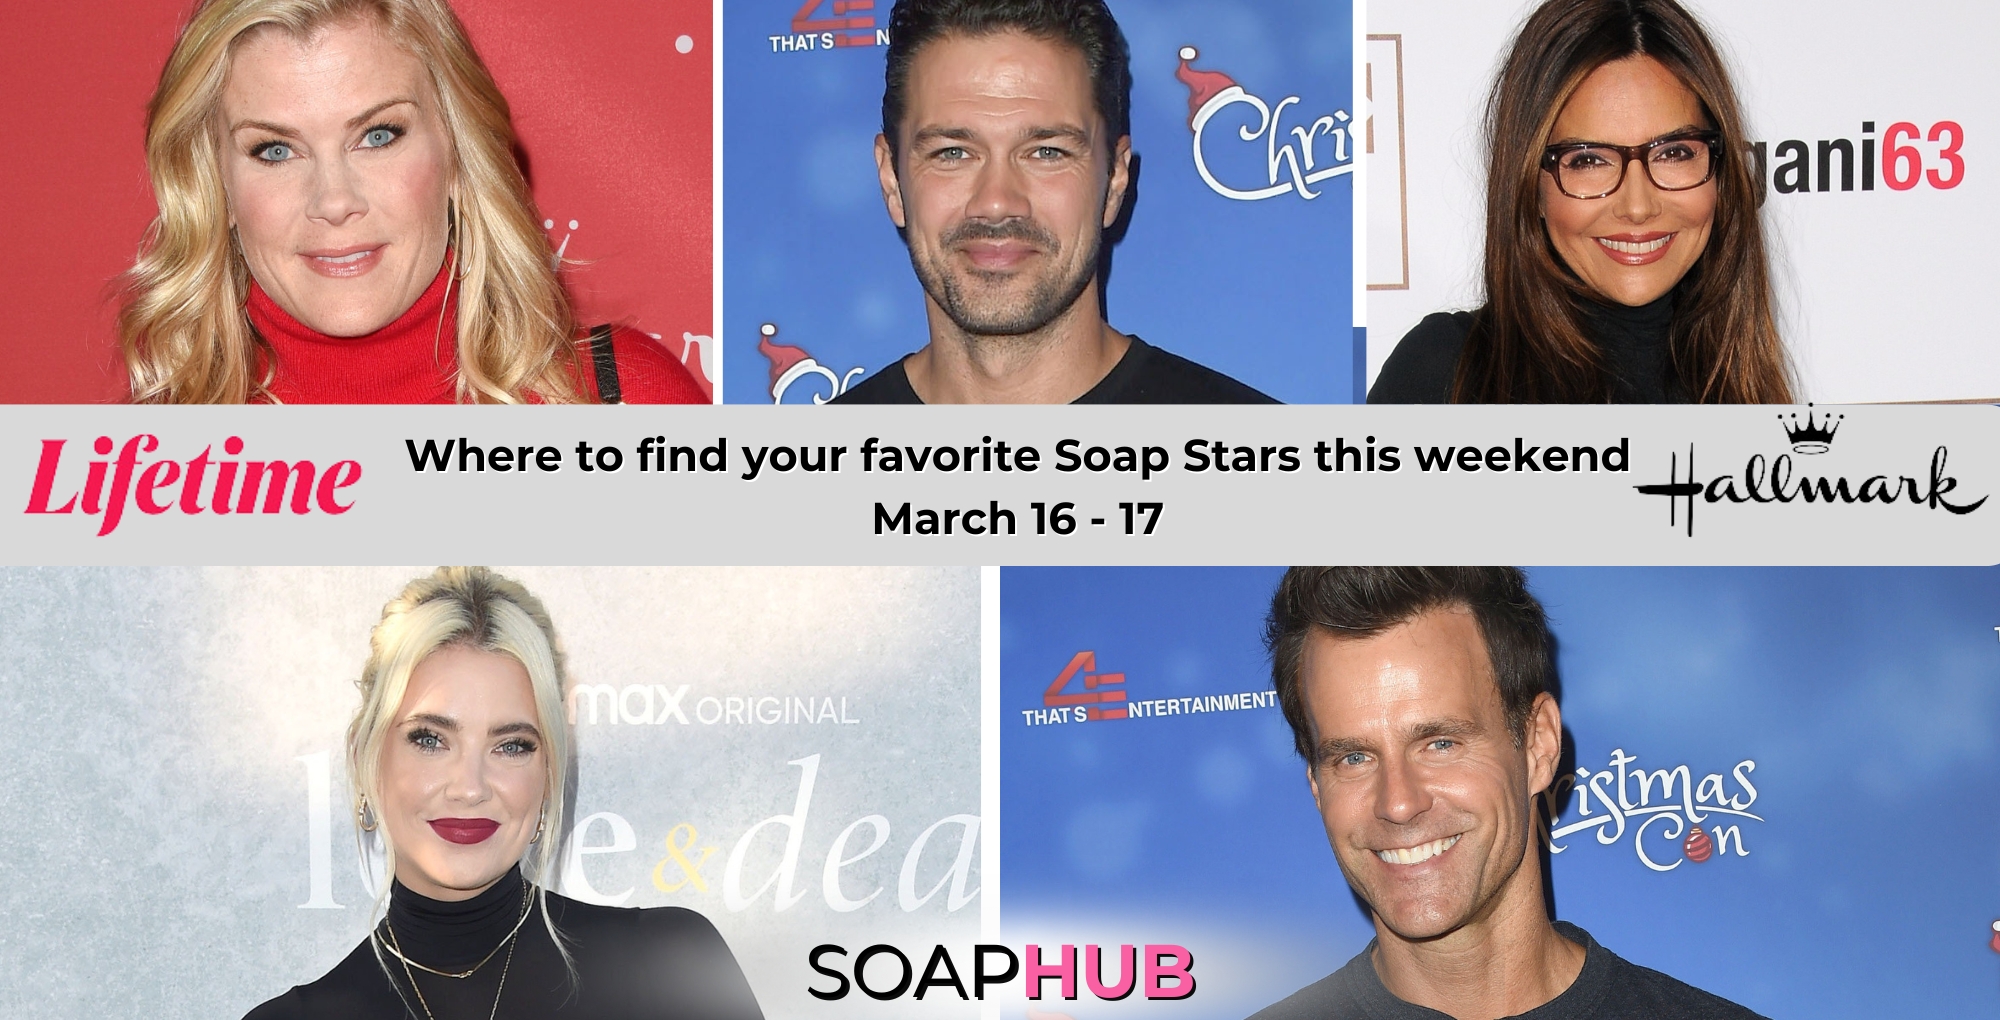 Soap Stars Alison Sweeney, Ryan Paevy, Vanessa Marcil, Ashley Benson, and Cameron Mathison with the Soap Hub logo across the bottom.